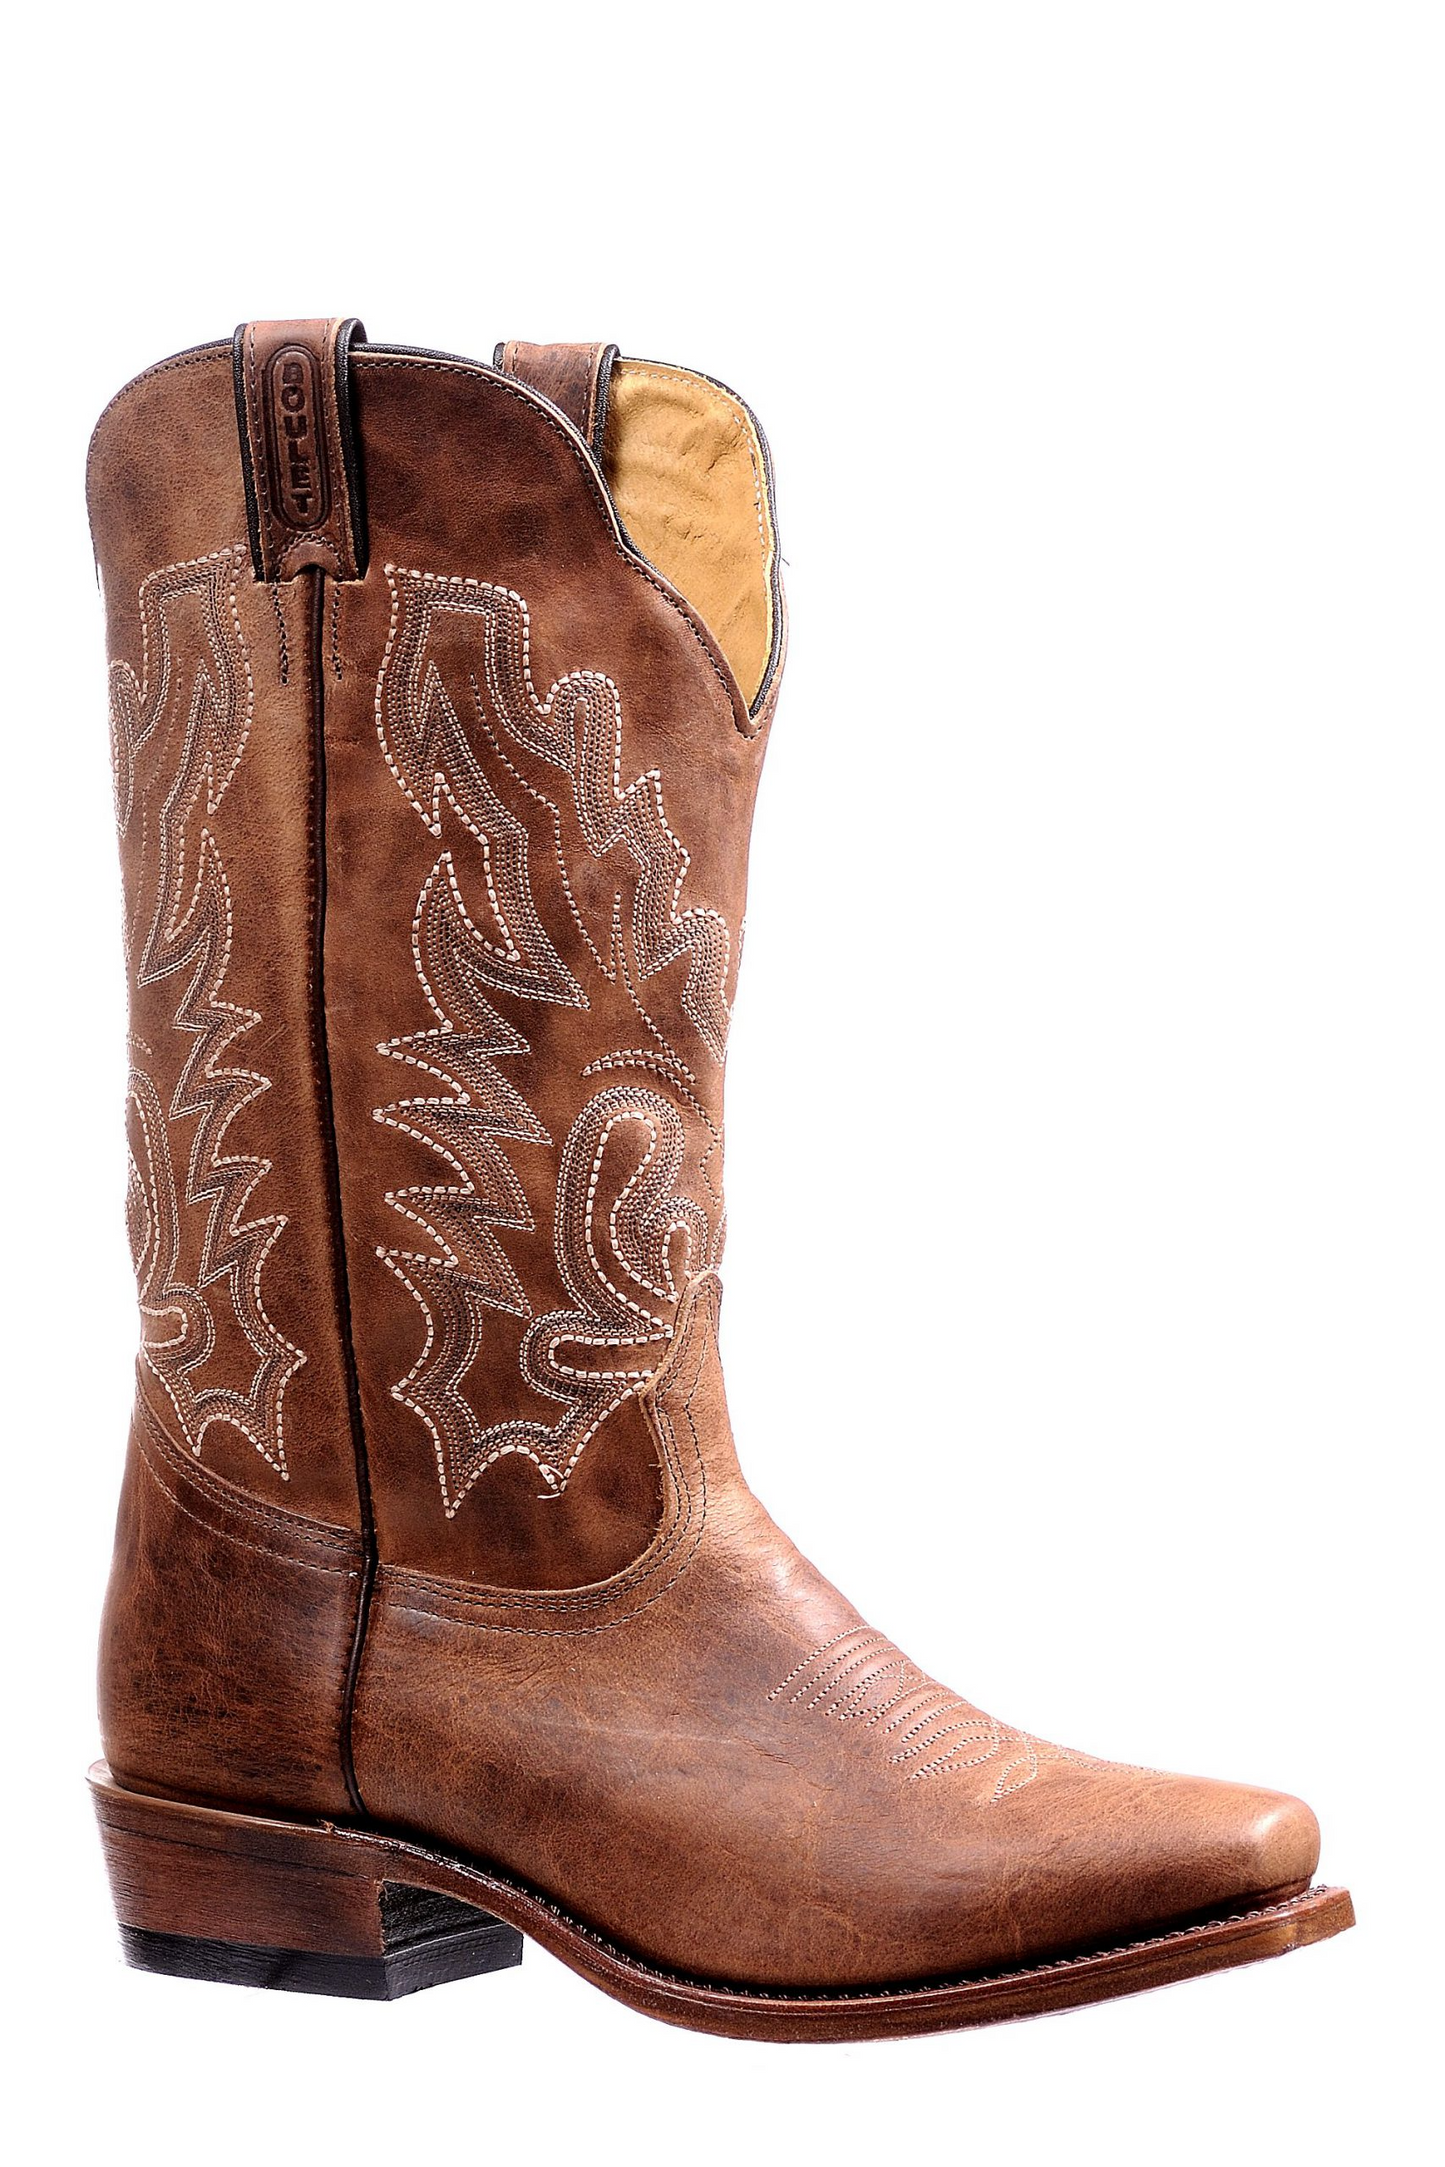 Boot Men's (7201) - 13" Cutter Toe in Hillbilly Golden